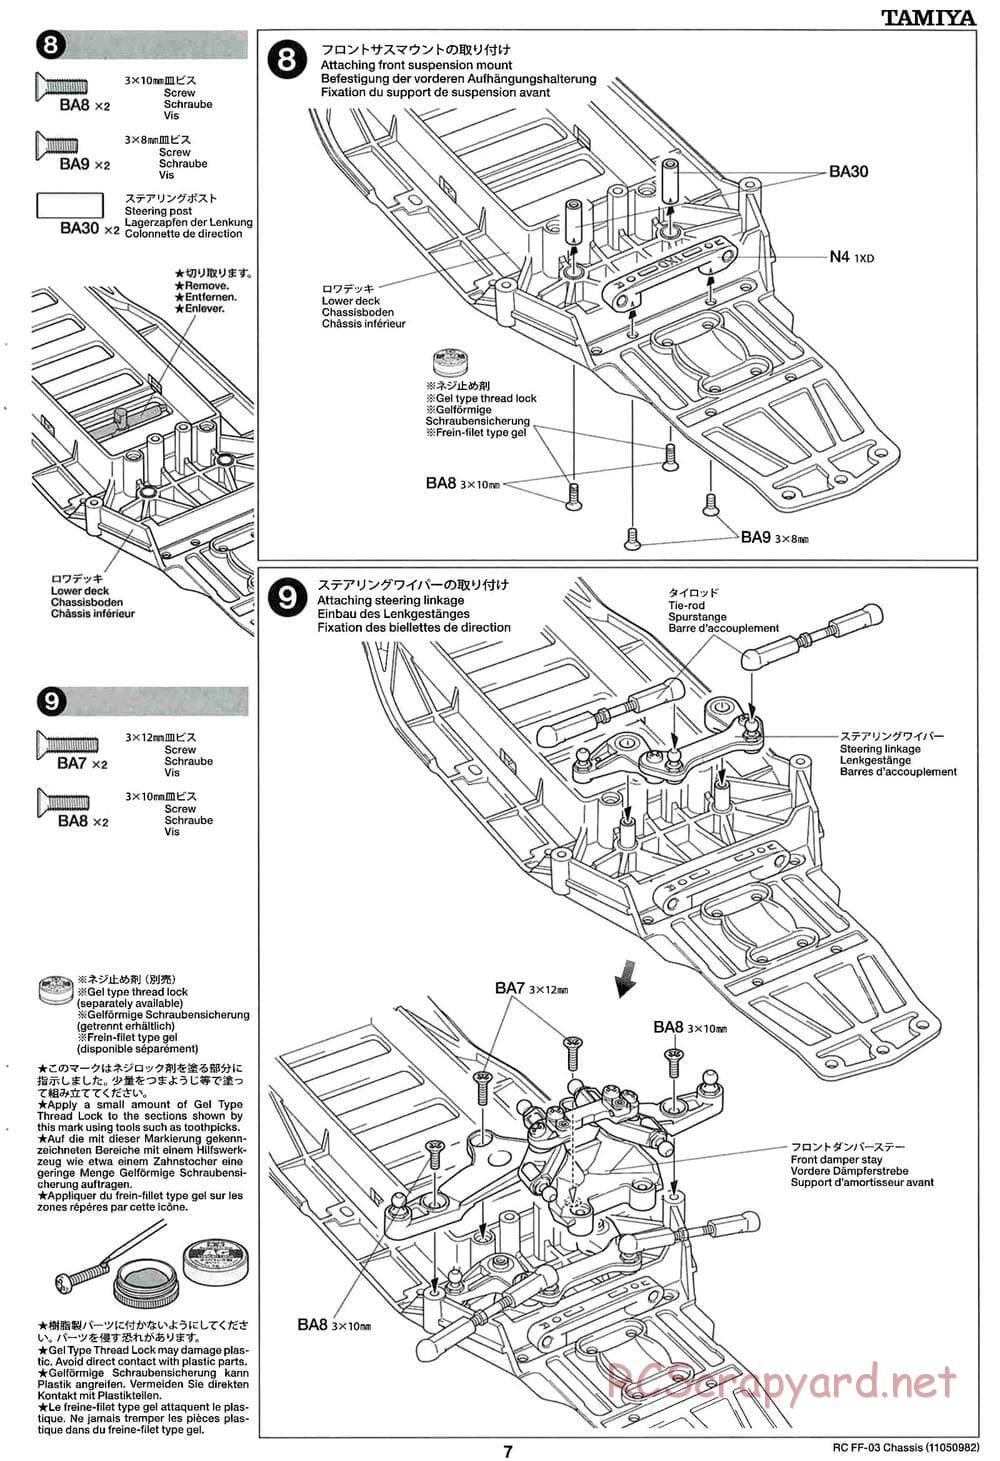 Tamiya - FF-03 Chassis - Manual - Page 7